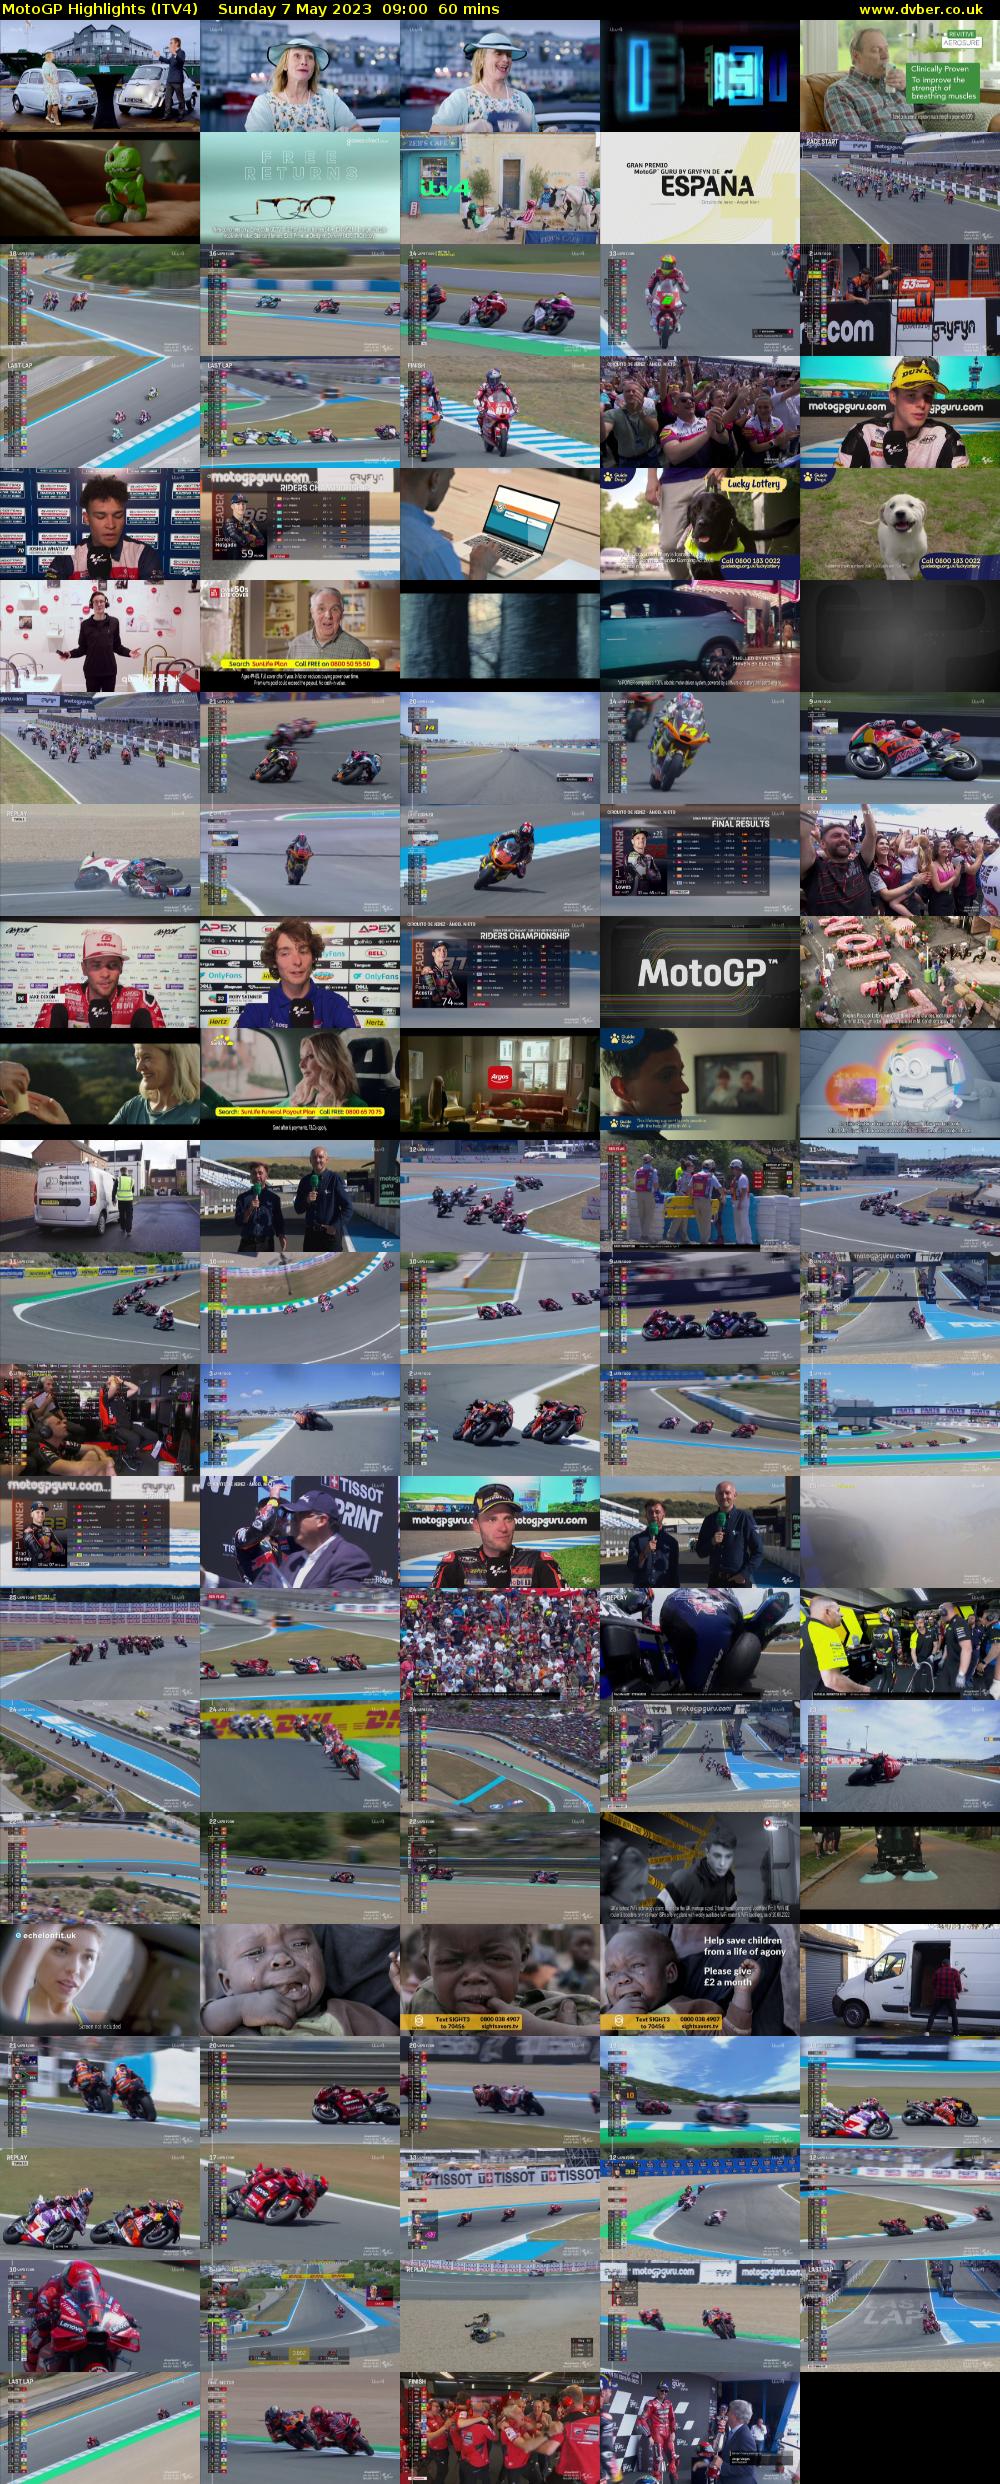 MotoGP Highlights (ITV4) Sunday 7 May 2023 09:00 - 10:00